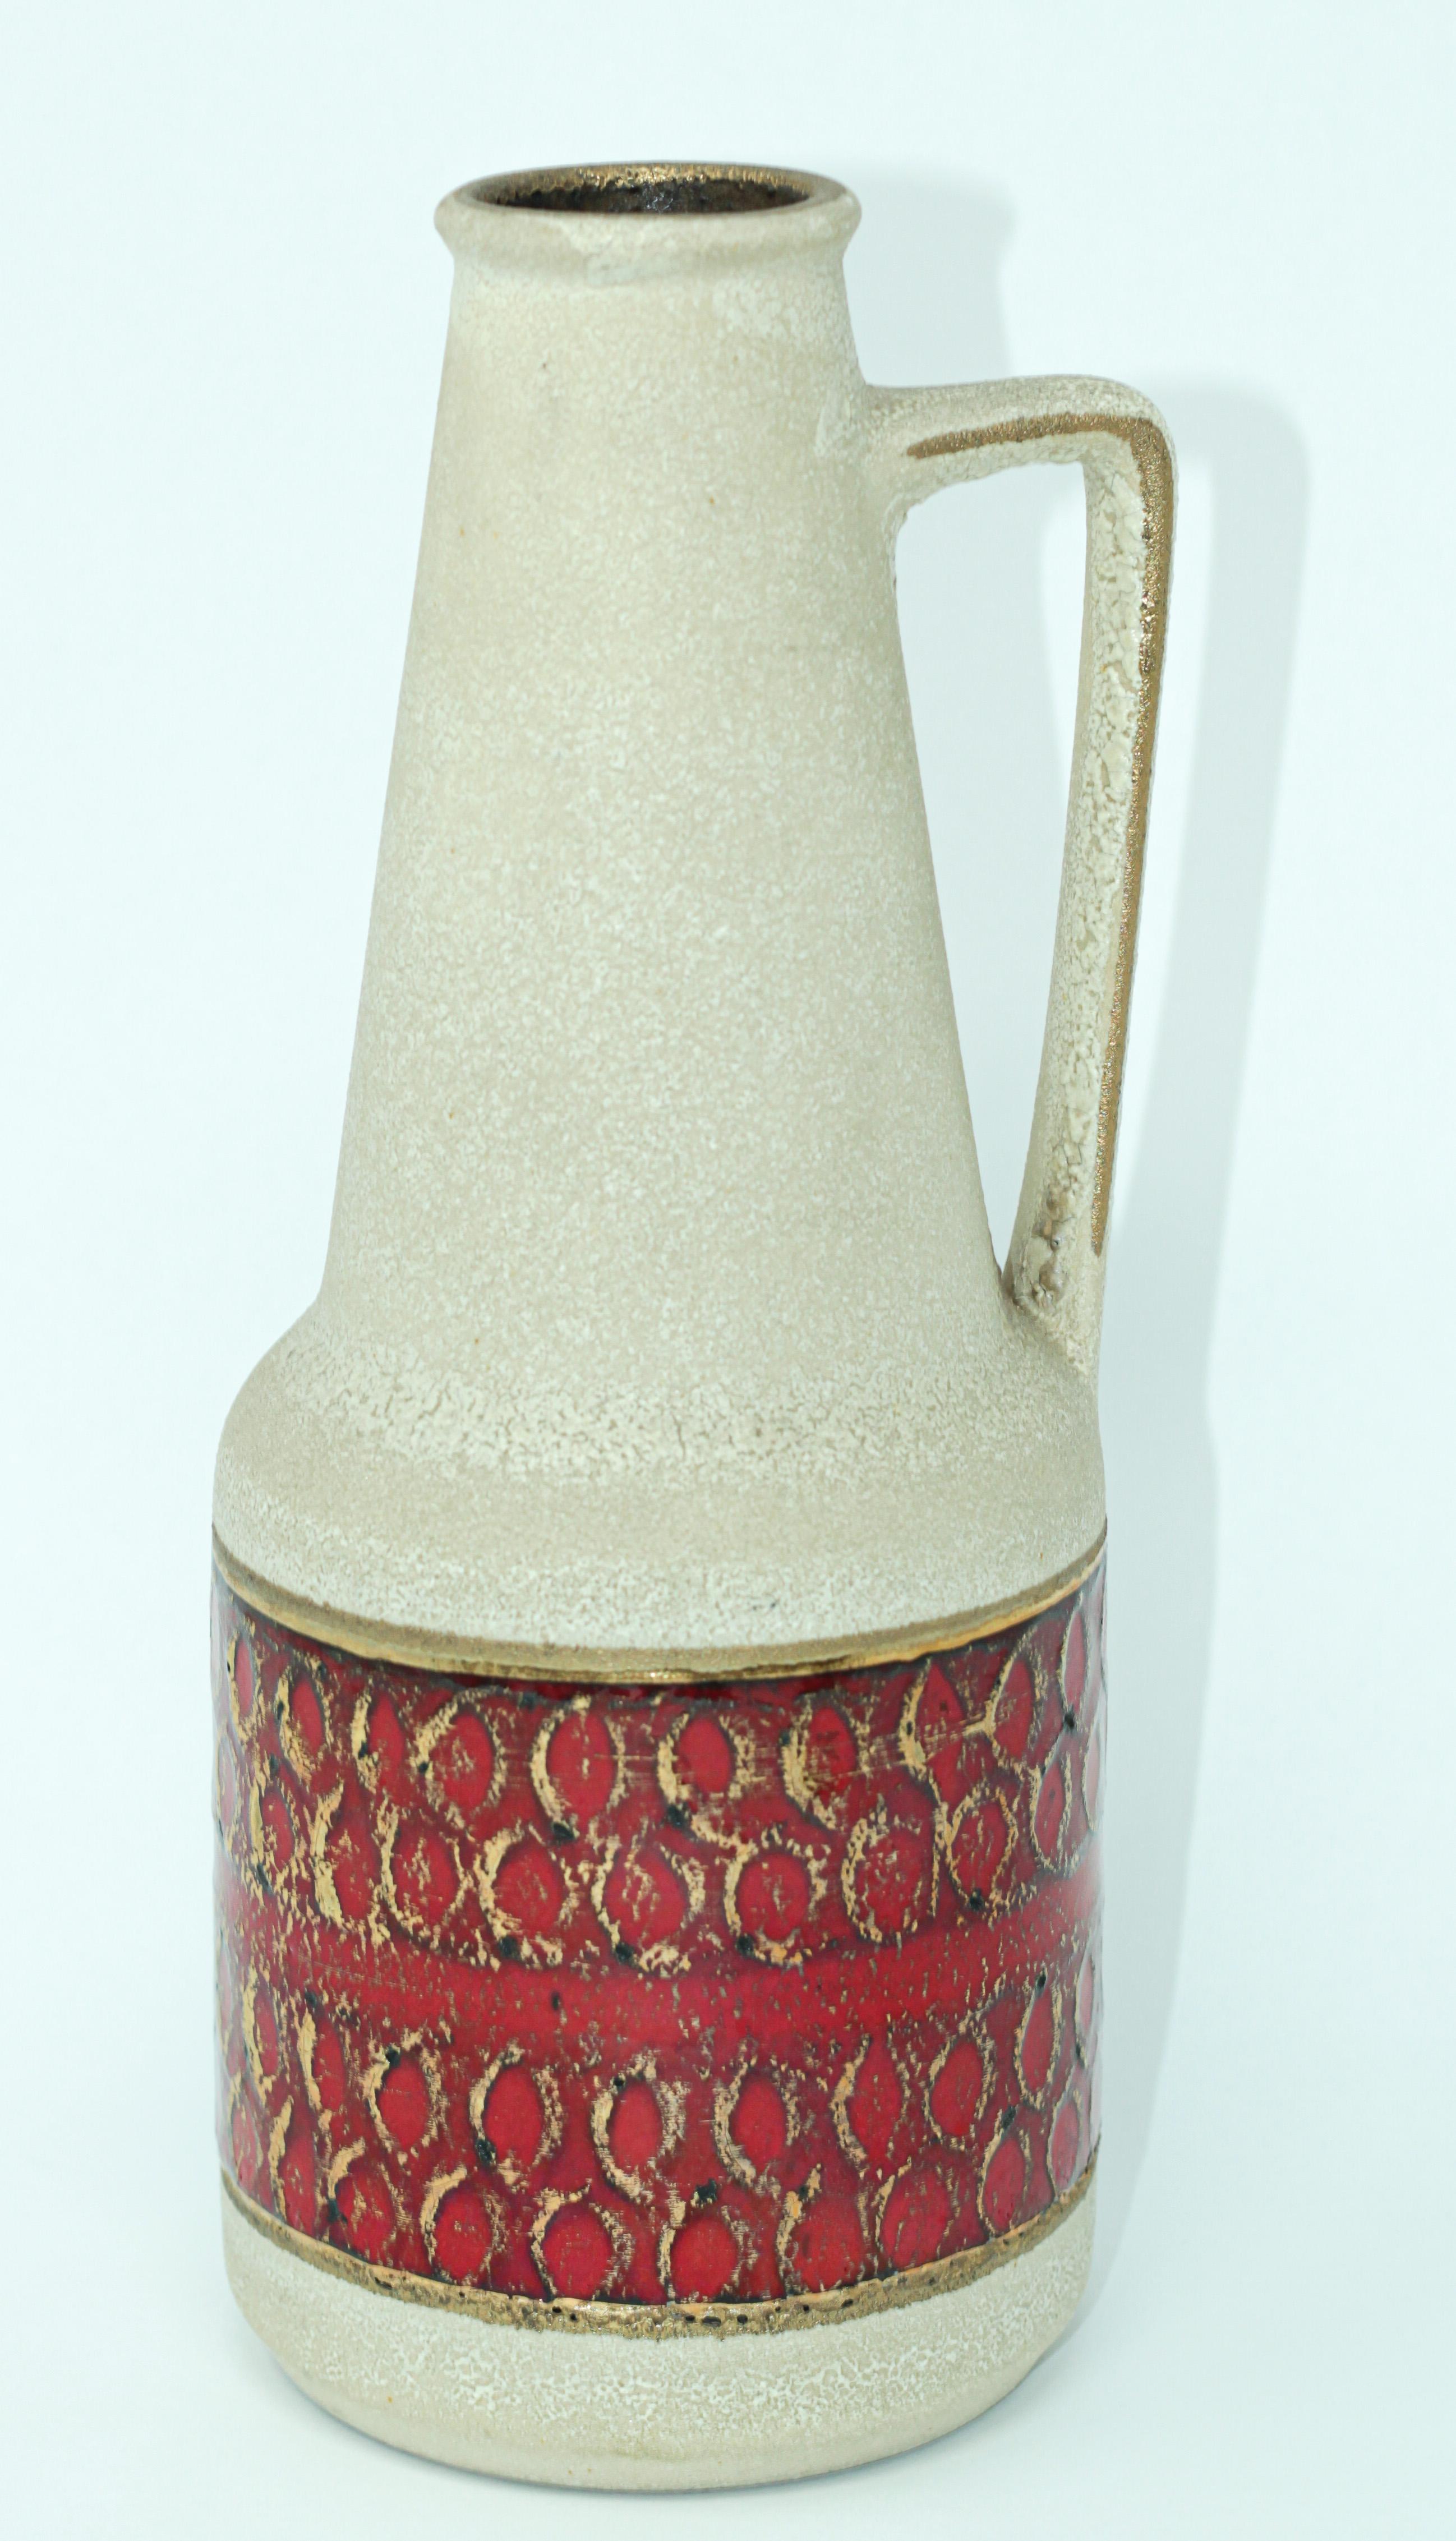 1950s ceramic Modernist West German Studio pottery vase with handle, Germany Bauhaus.
Midcentury ceramic fat lava glaze volcanic pottery vase.
Vibrant vase in an orange, red, cream lava finish.
Straightforward and minimalistic design of the 1960s